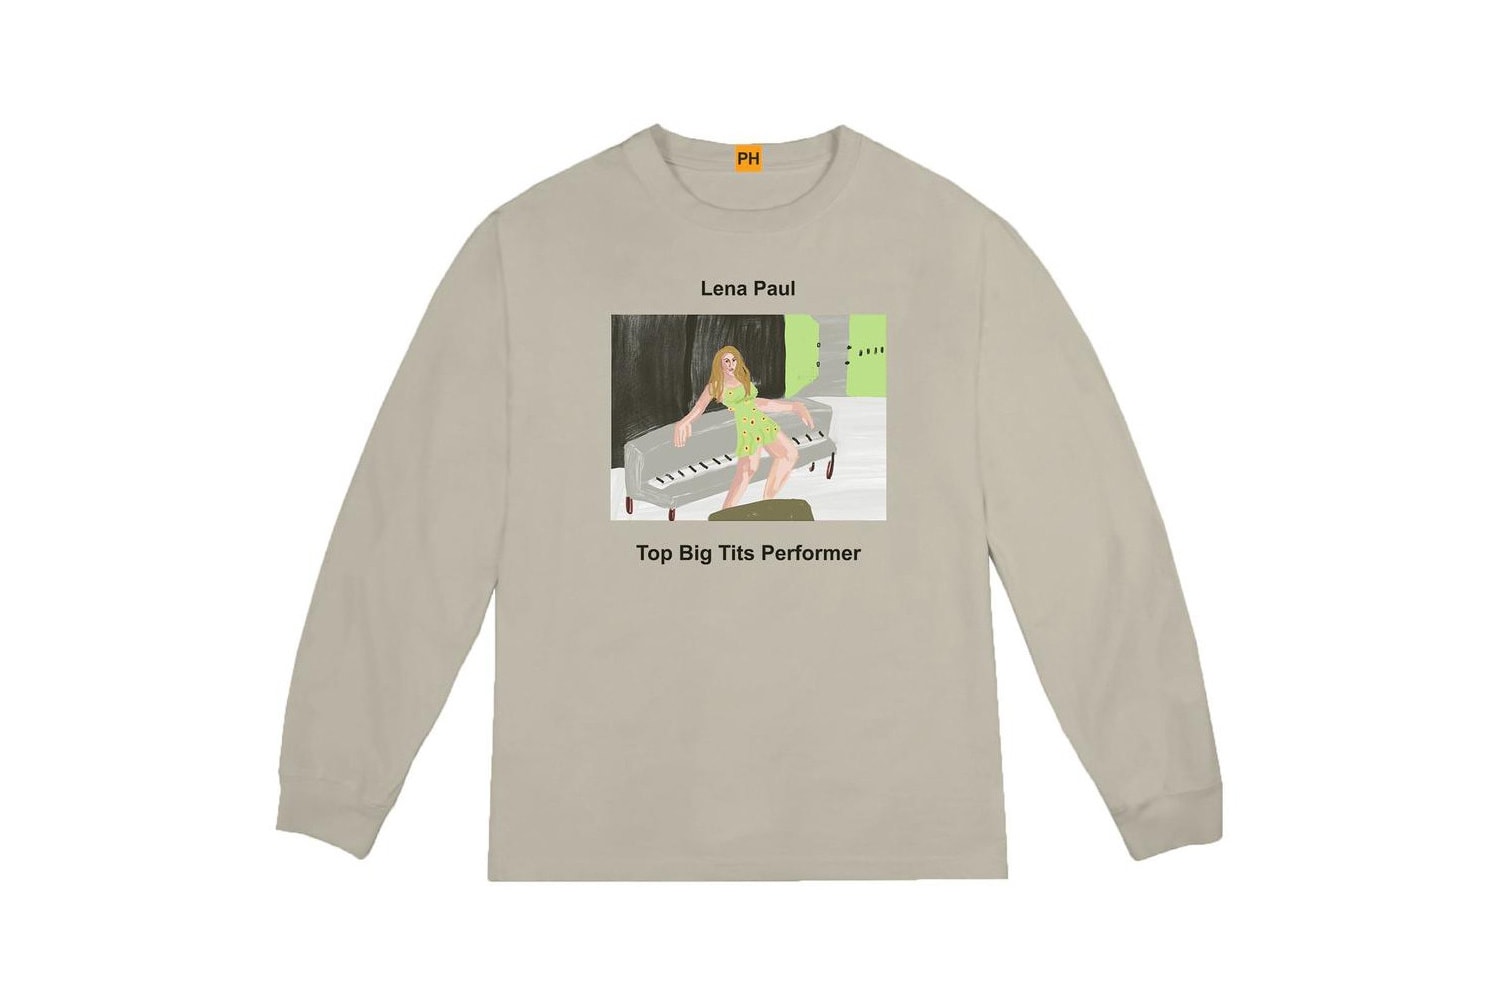 Pornhub YEEZY Kanye West Long Sleeve Shirt Lena Paul Collaboration Capsule Collection